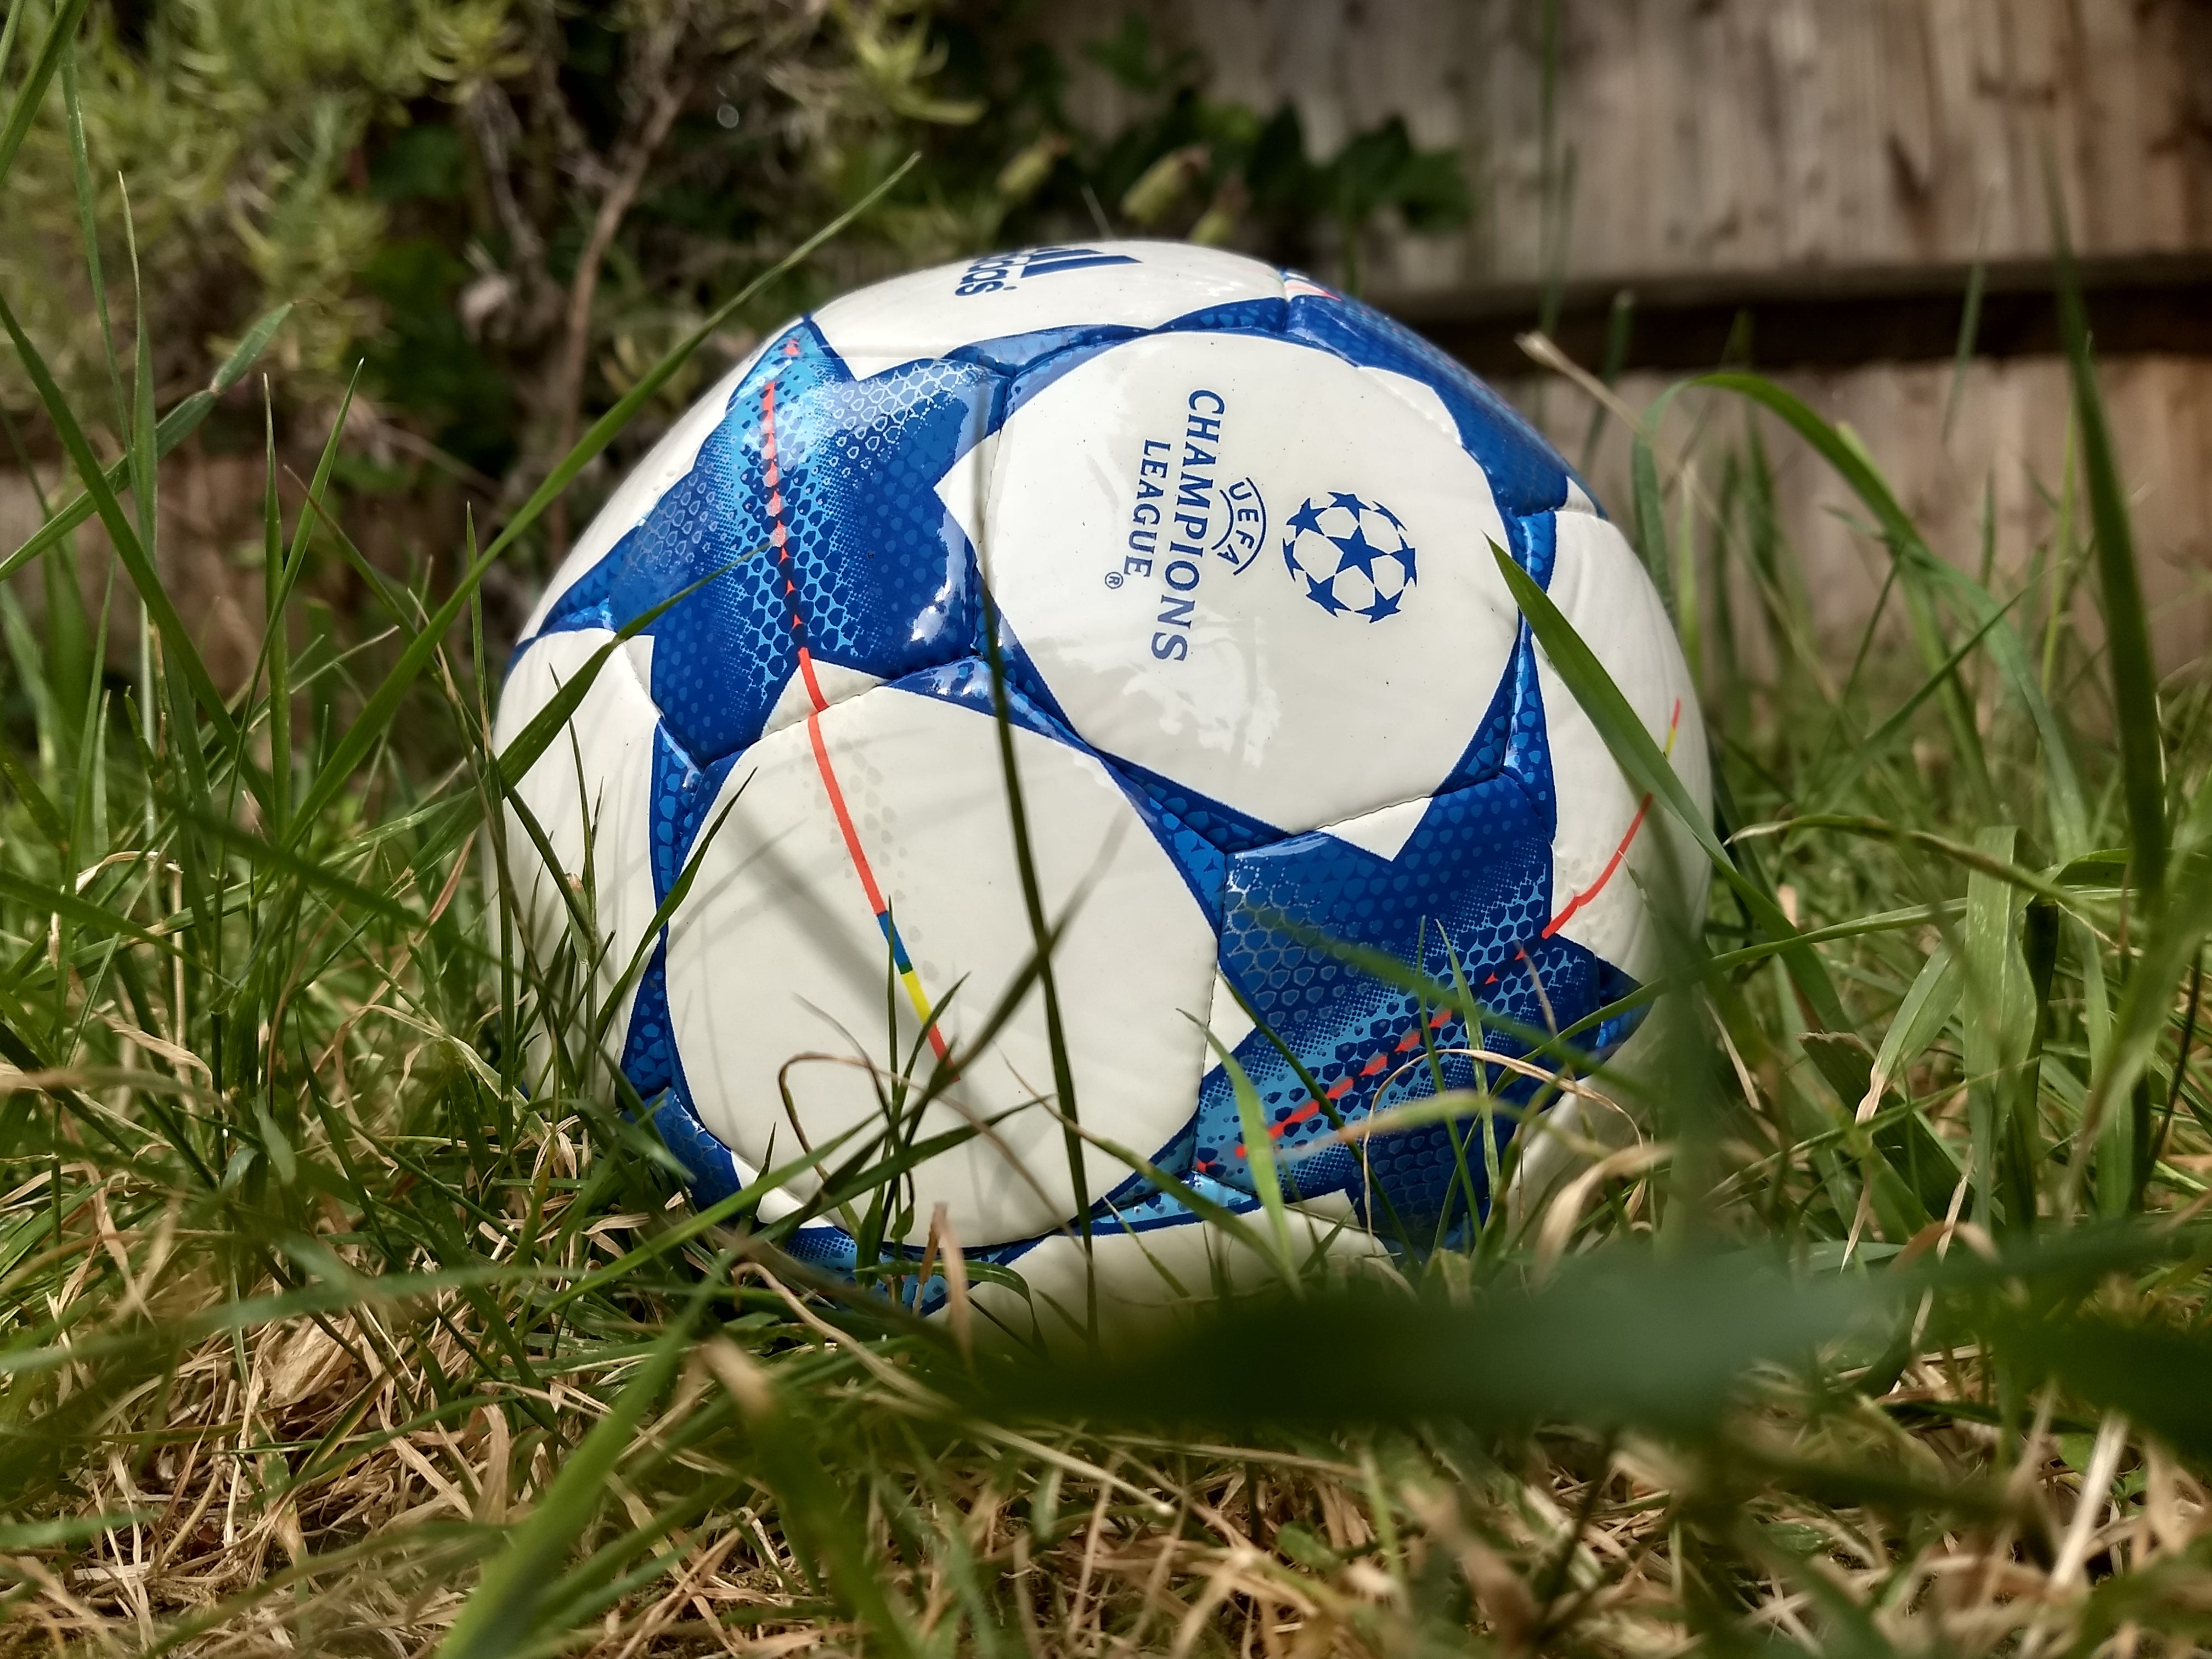 Soccer ball on grass showcasing camera's depth of field.